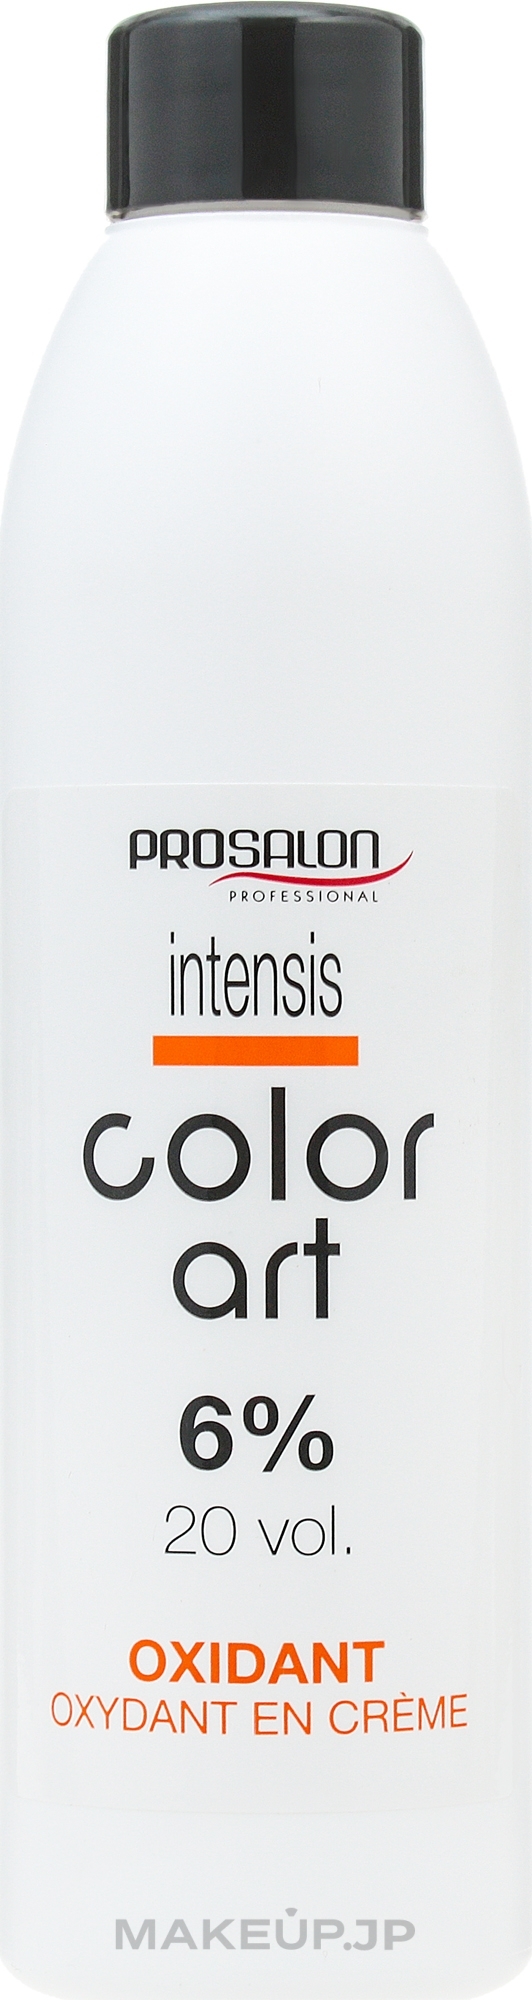 Oxydant 6% - Prosalon Intensis Color Art Oxydant vol 20 — photo 150 ml